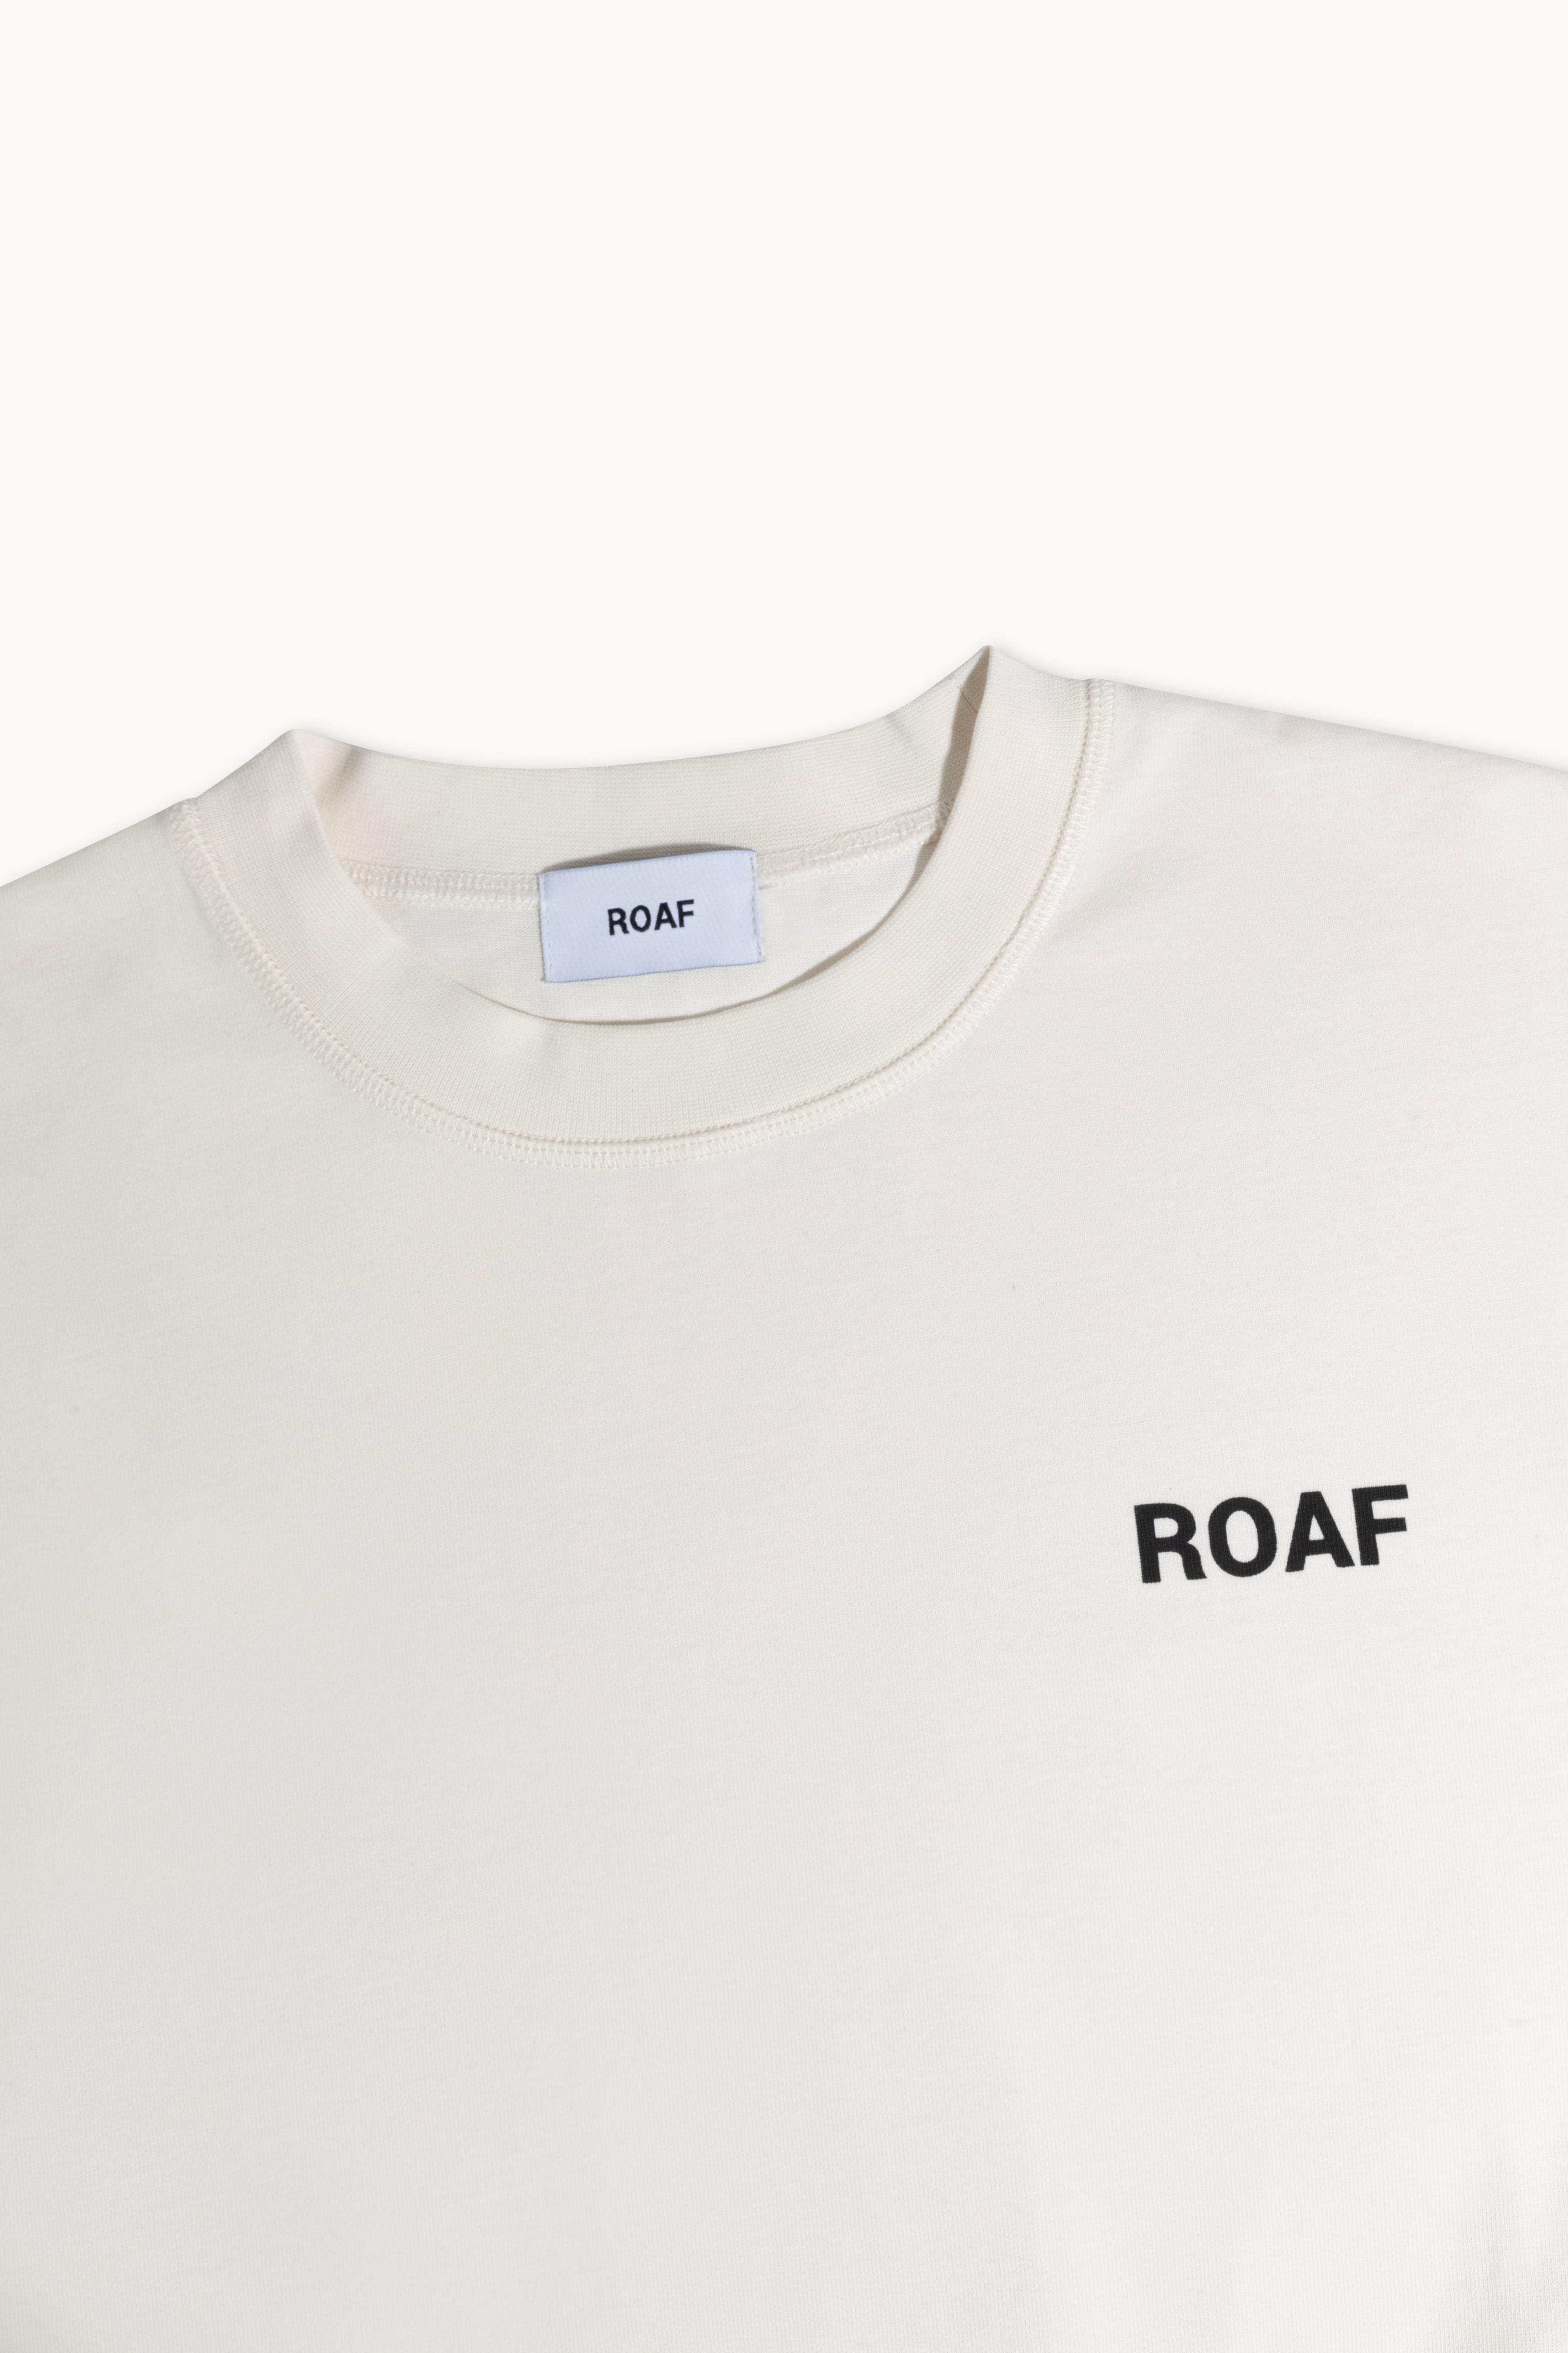 ROAF Logo Tee in Ecru Cotton